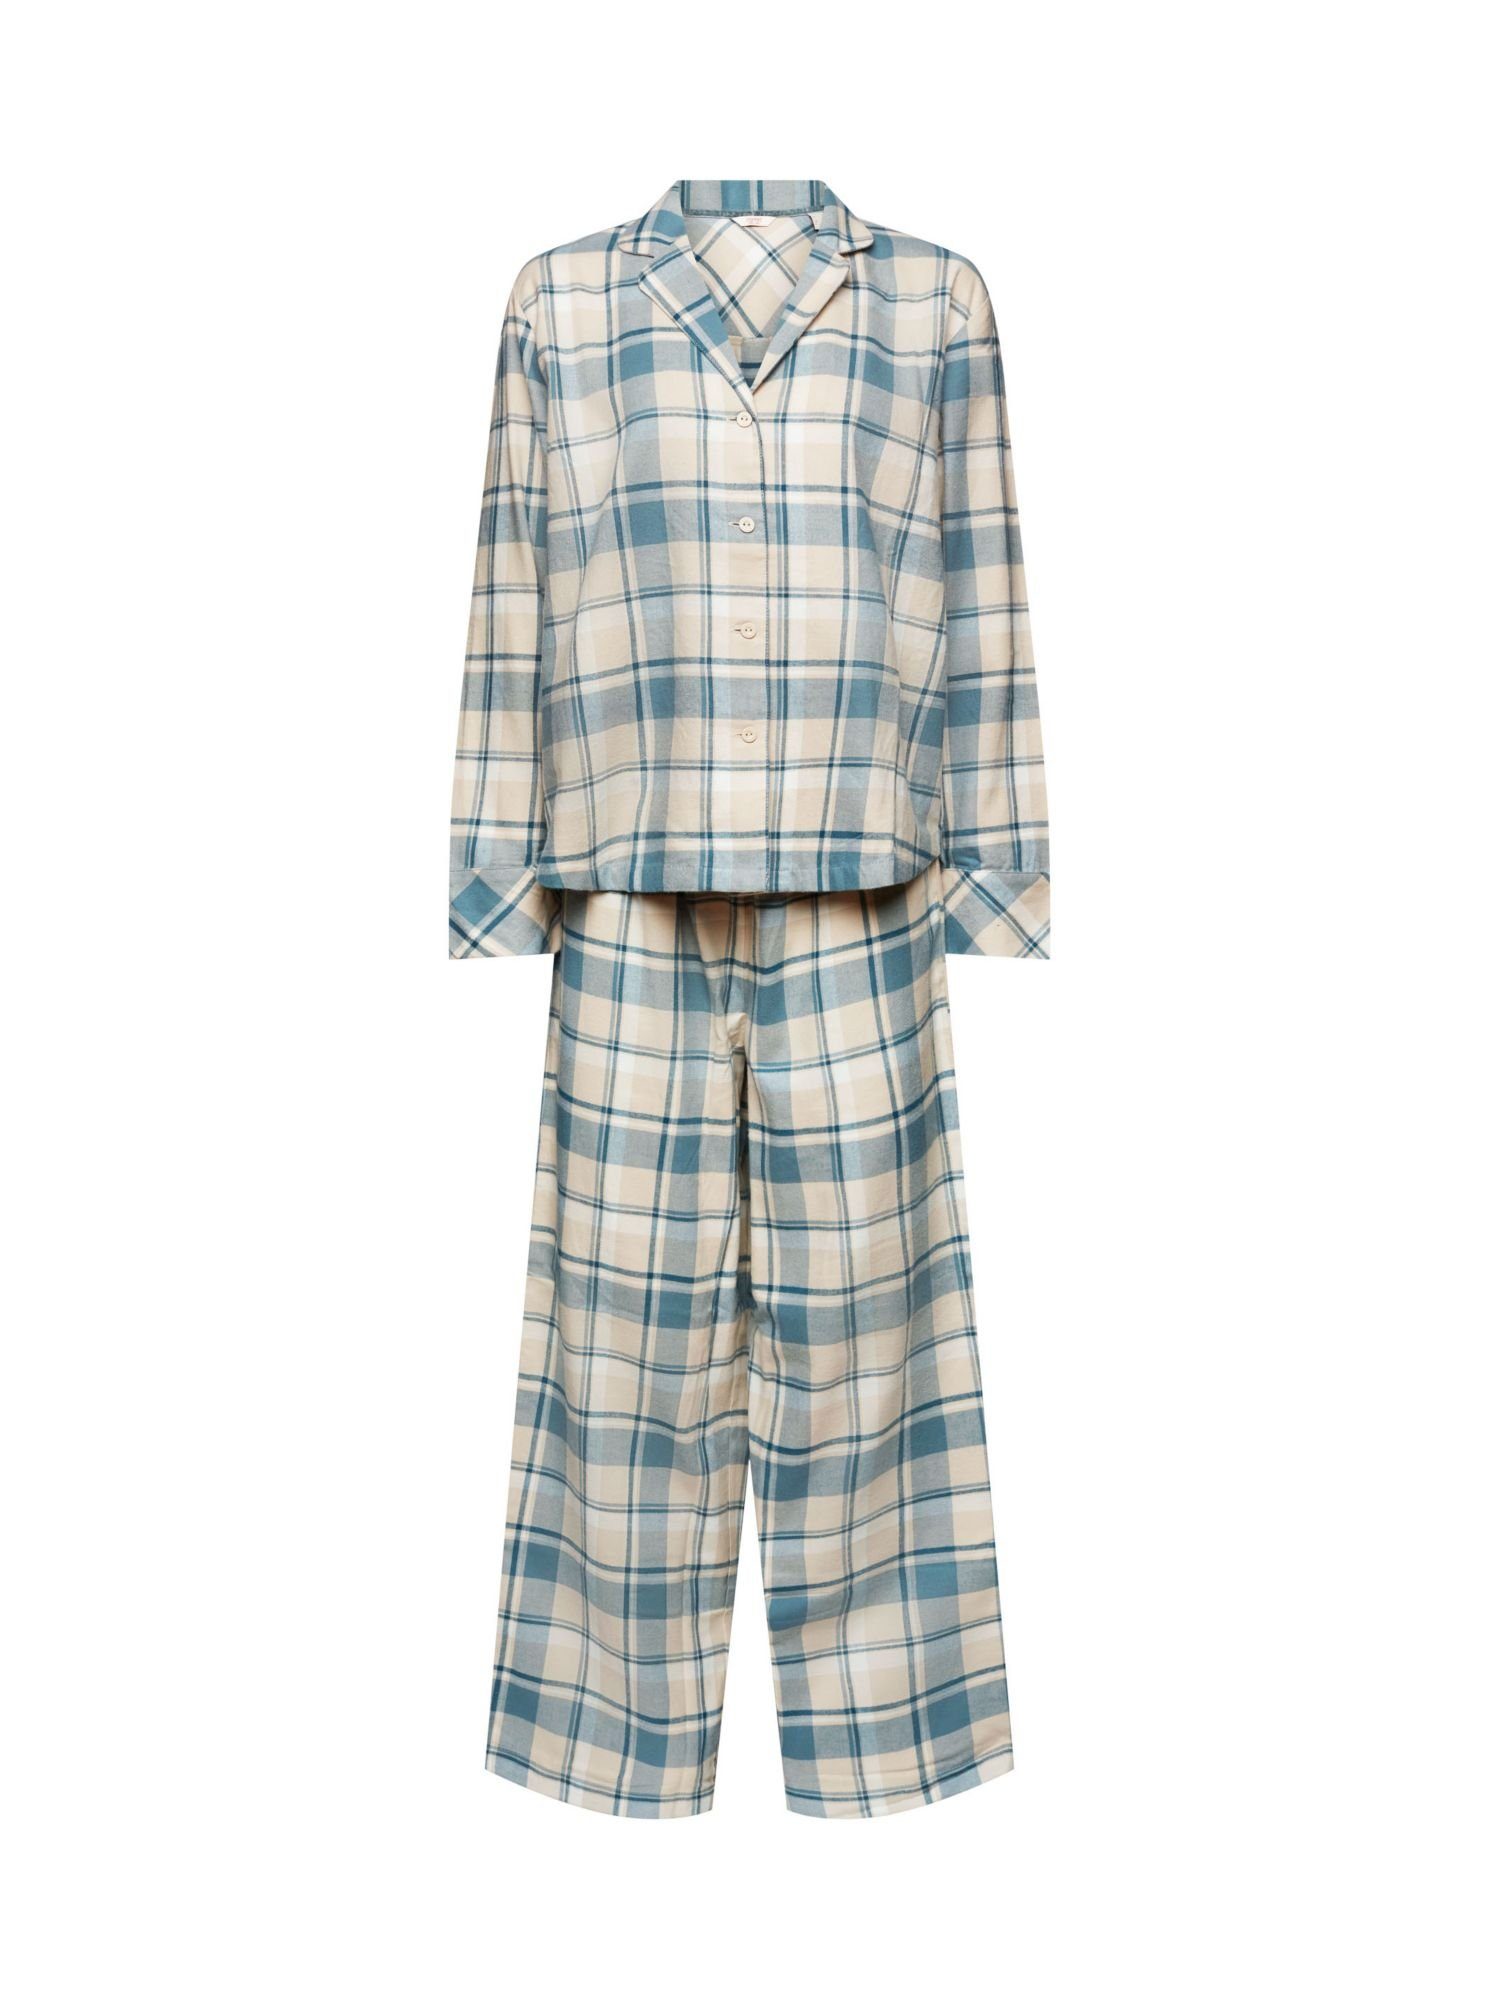 Pyjama-Set Flanell NEW aus Pyjama kariertem BLUE TEAL Esprit